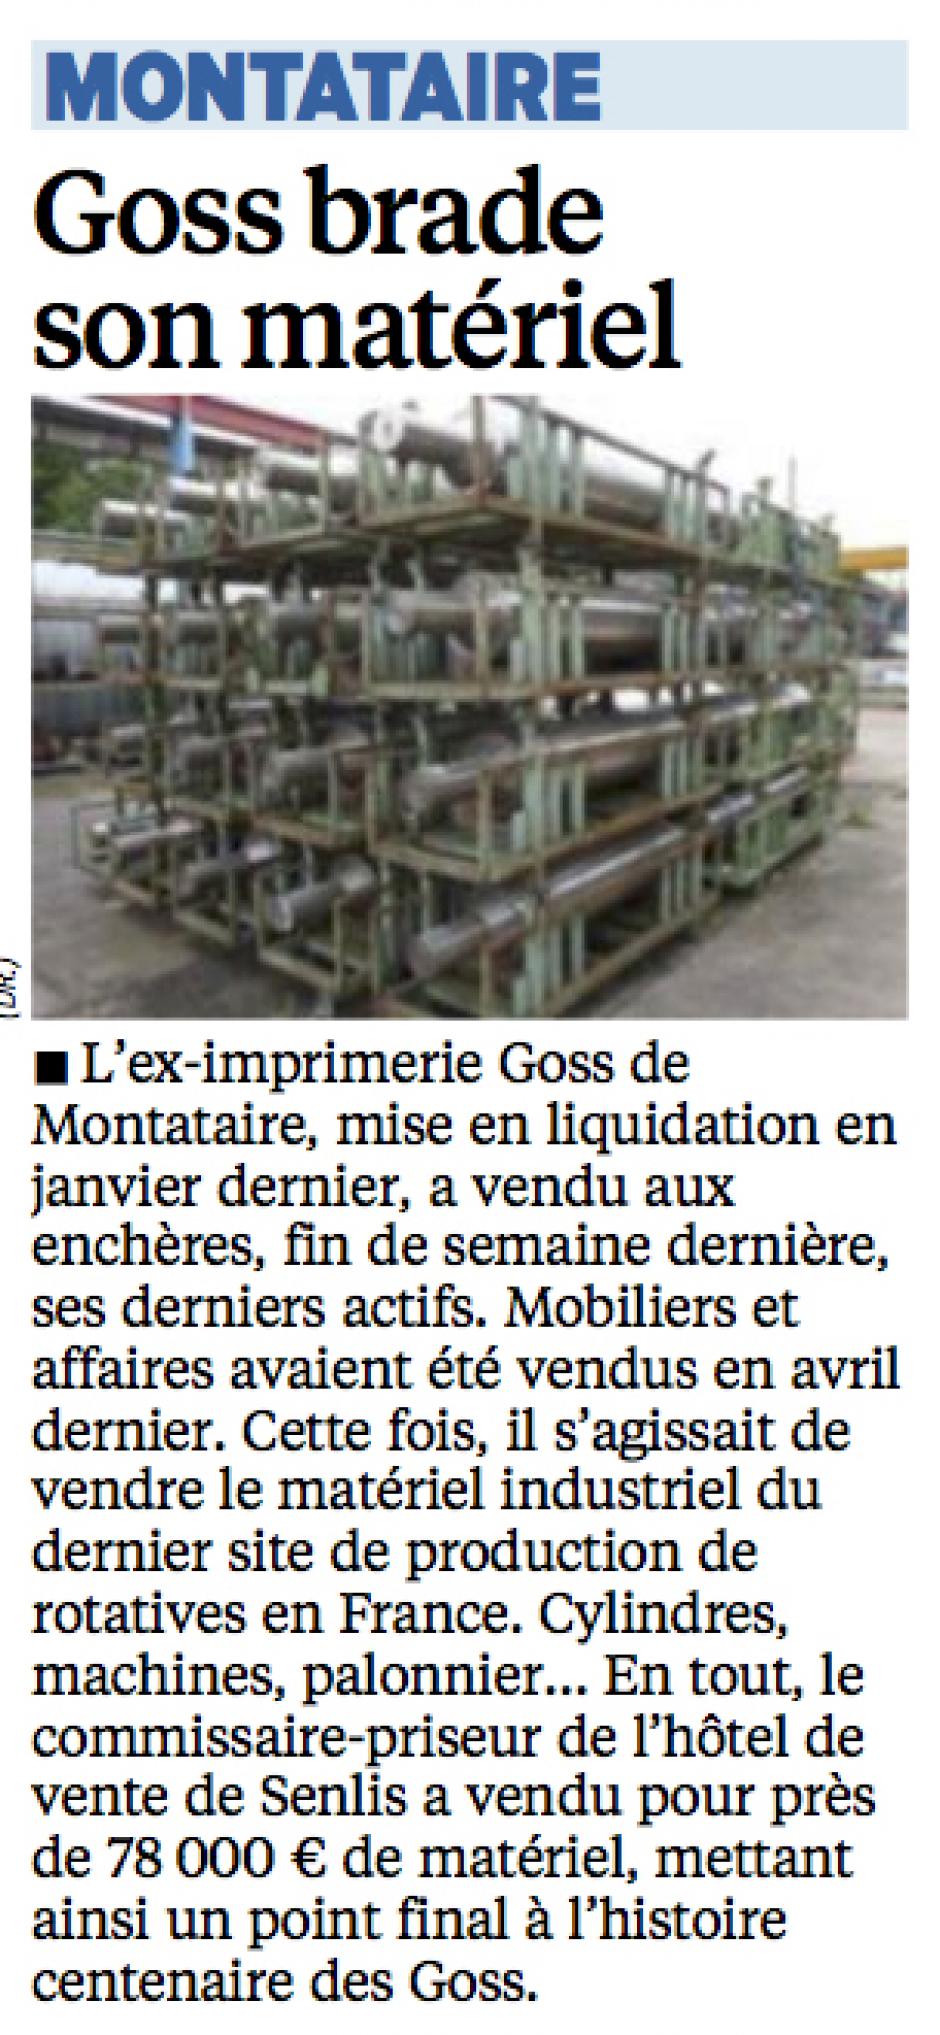 20140714-LeP-Montataire-Goss brade son matériel